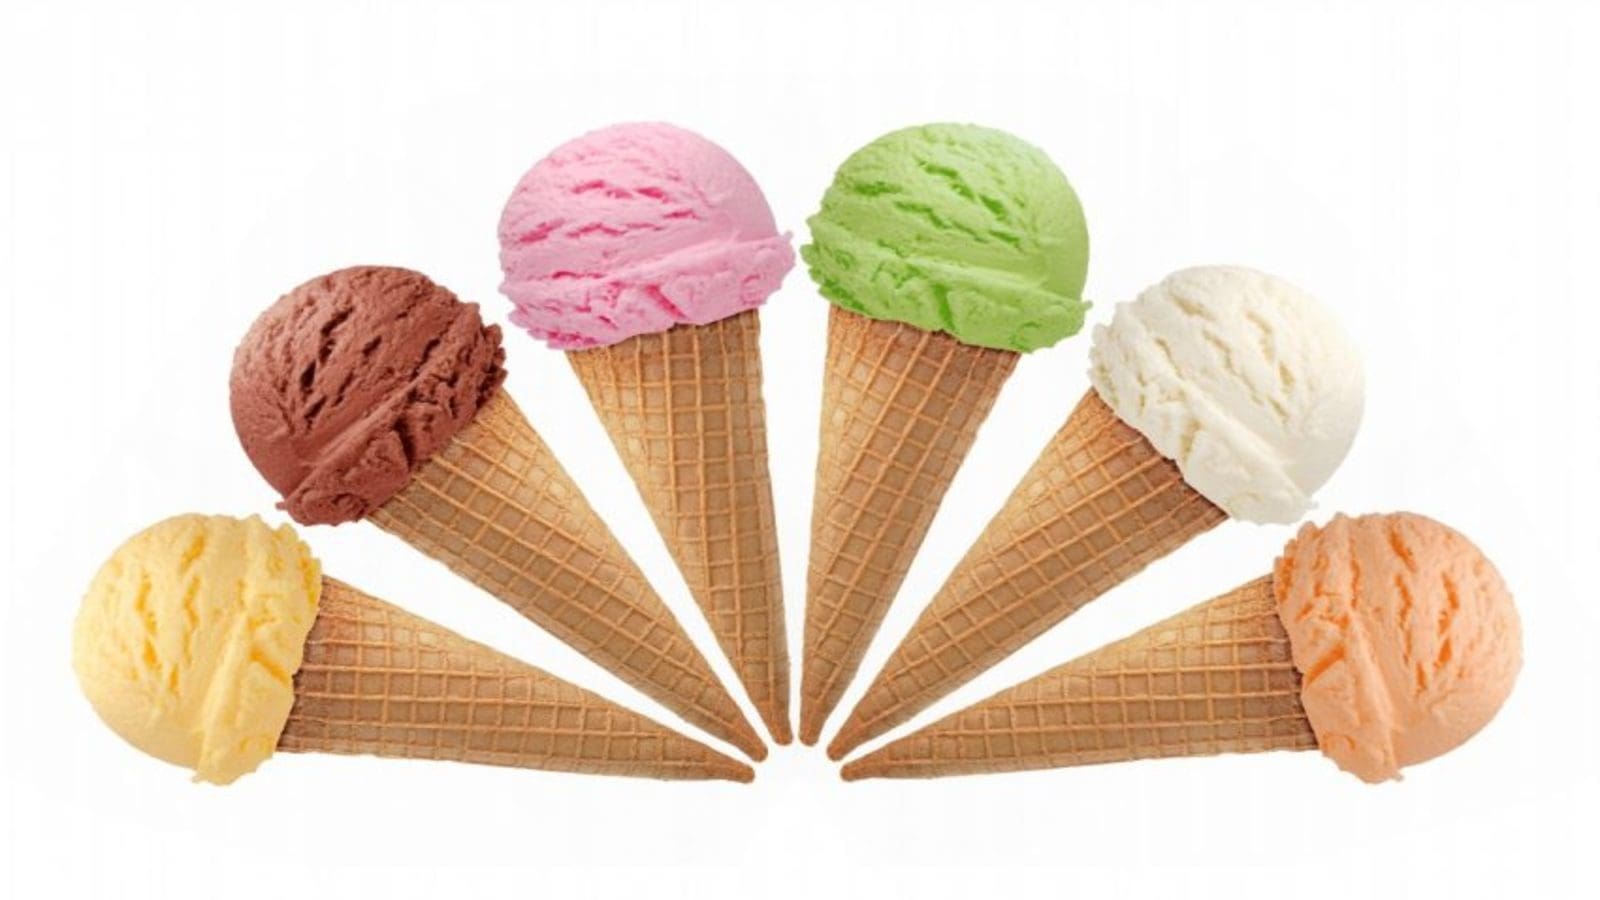 Lake Ice cream unveils plans to build the greenest ice cream plant in UK